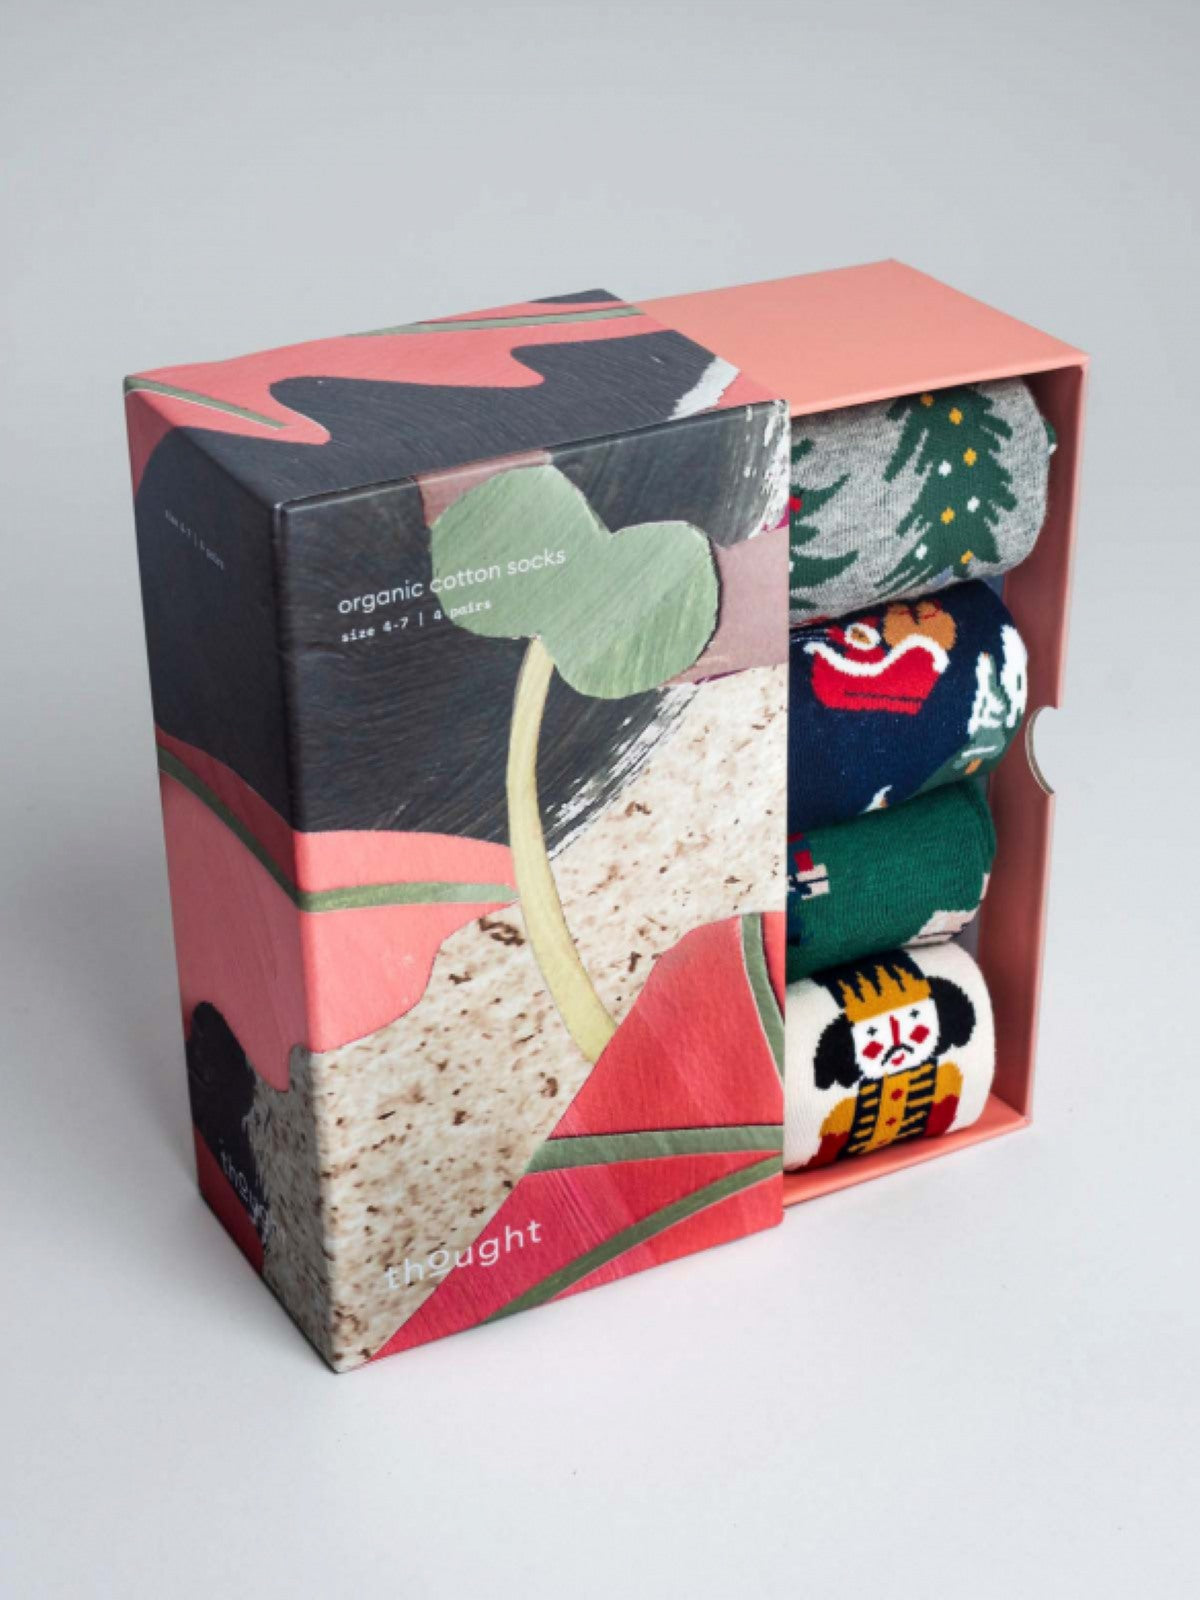 Eleodora Christmas Organic Cotton 4 Pack Sock Box - Multi